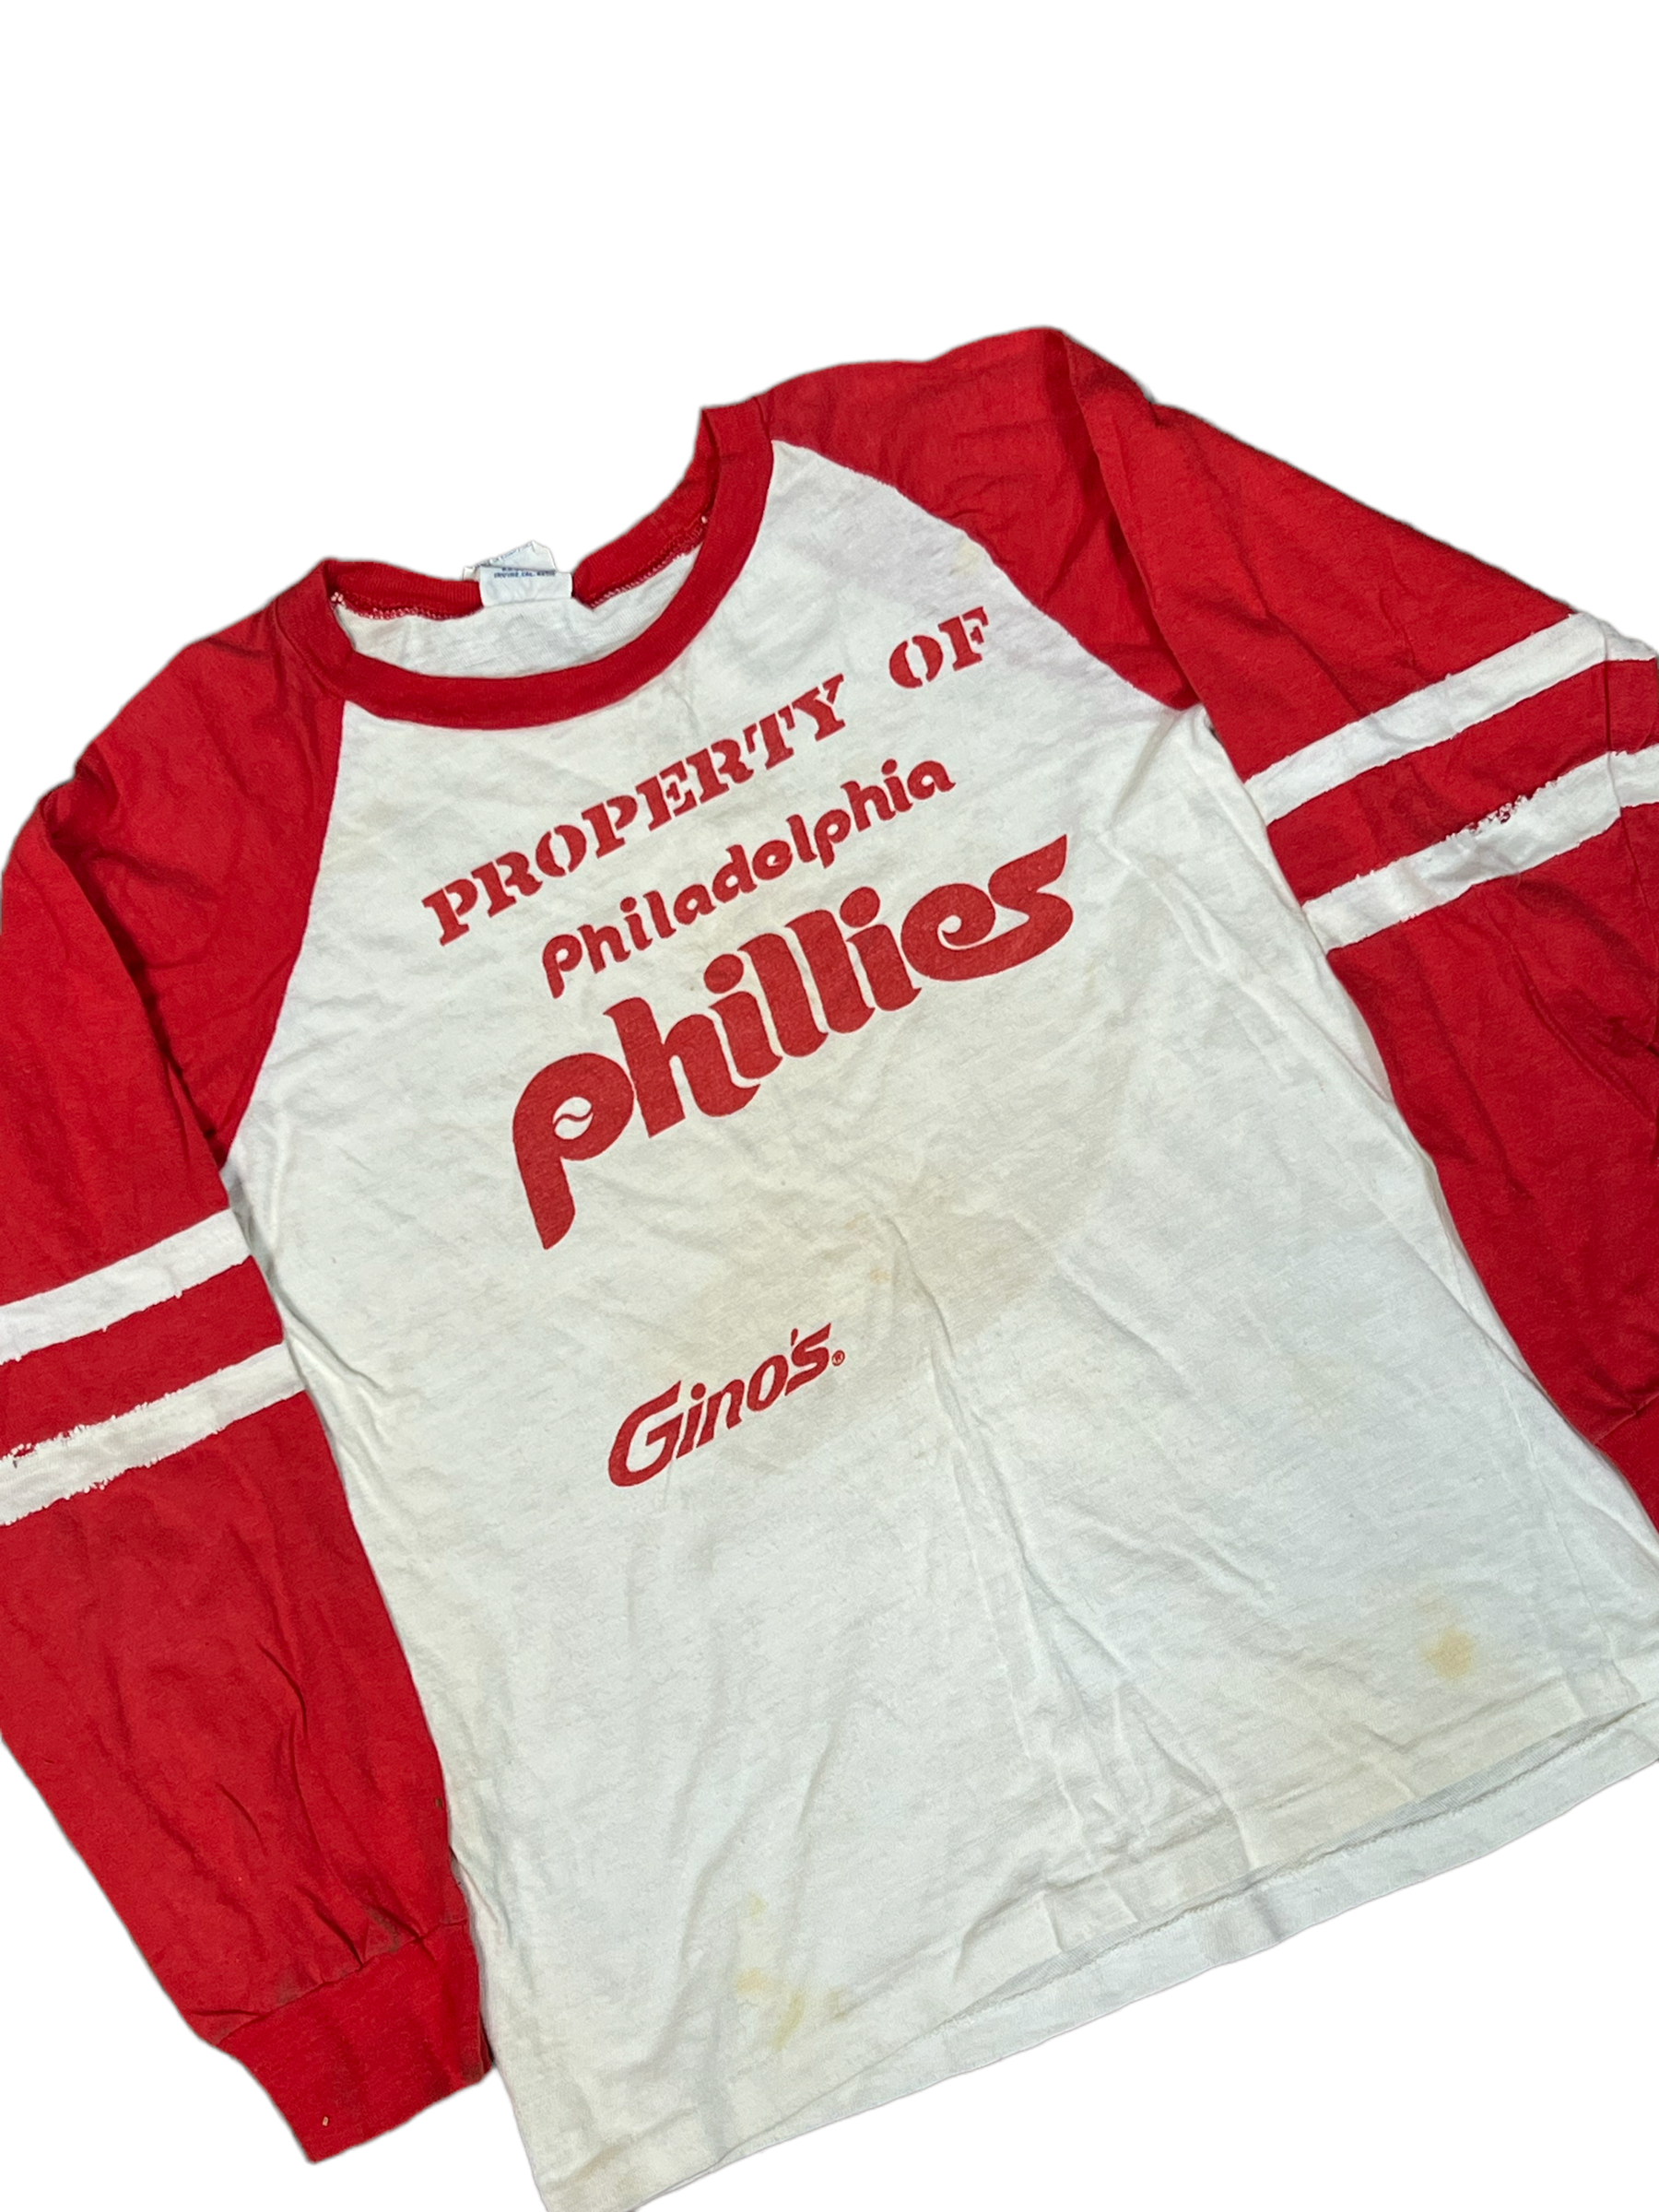 Shirts - Philadelphia Phillies Throwback Apparel & Jerseys